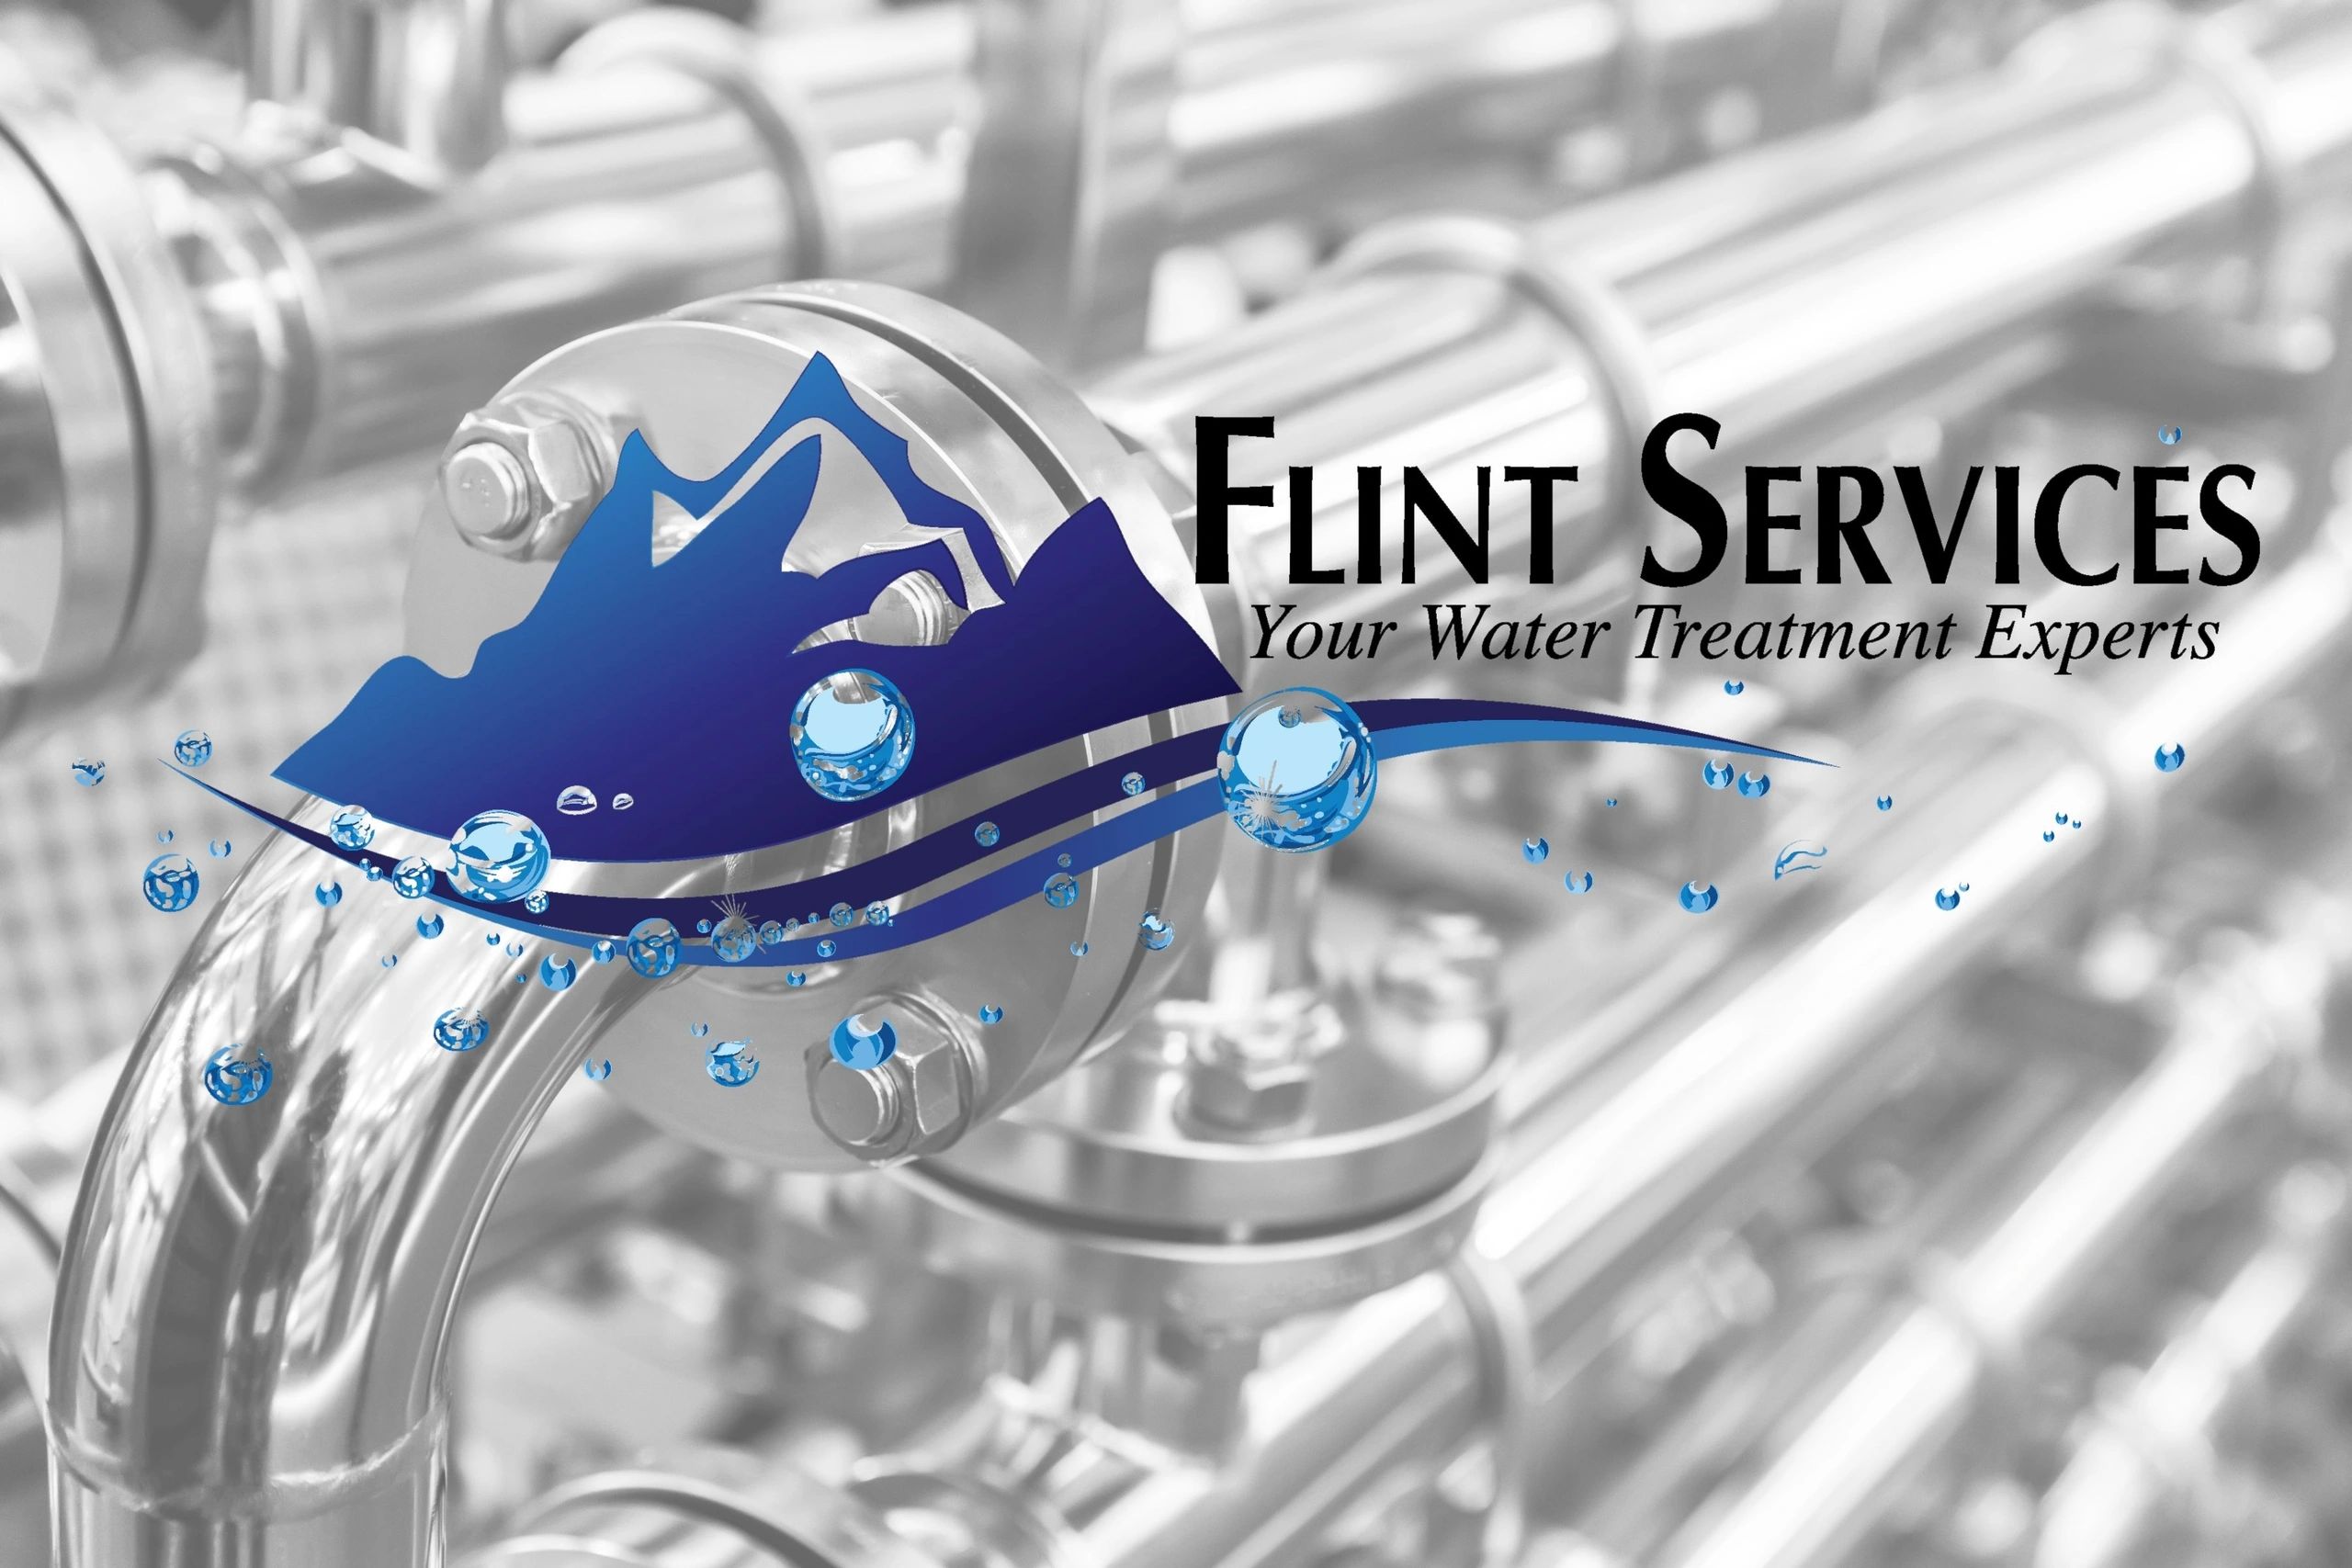 Flint Services